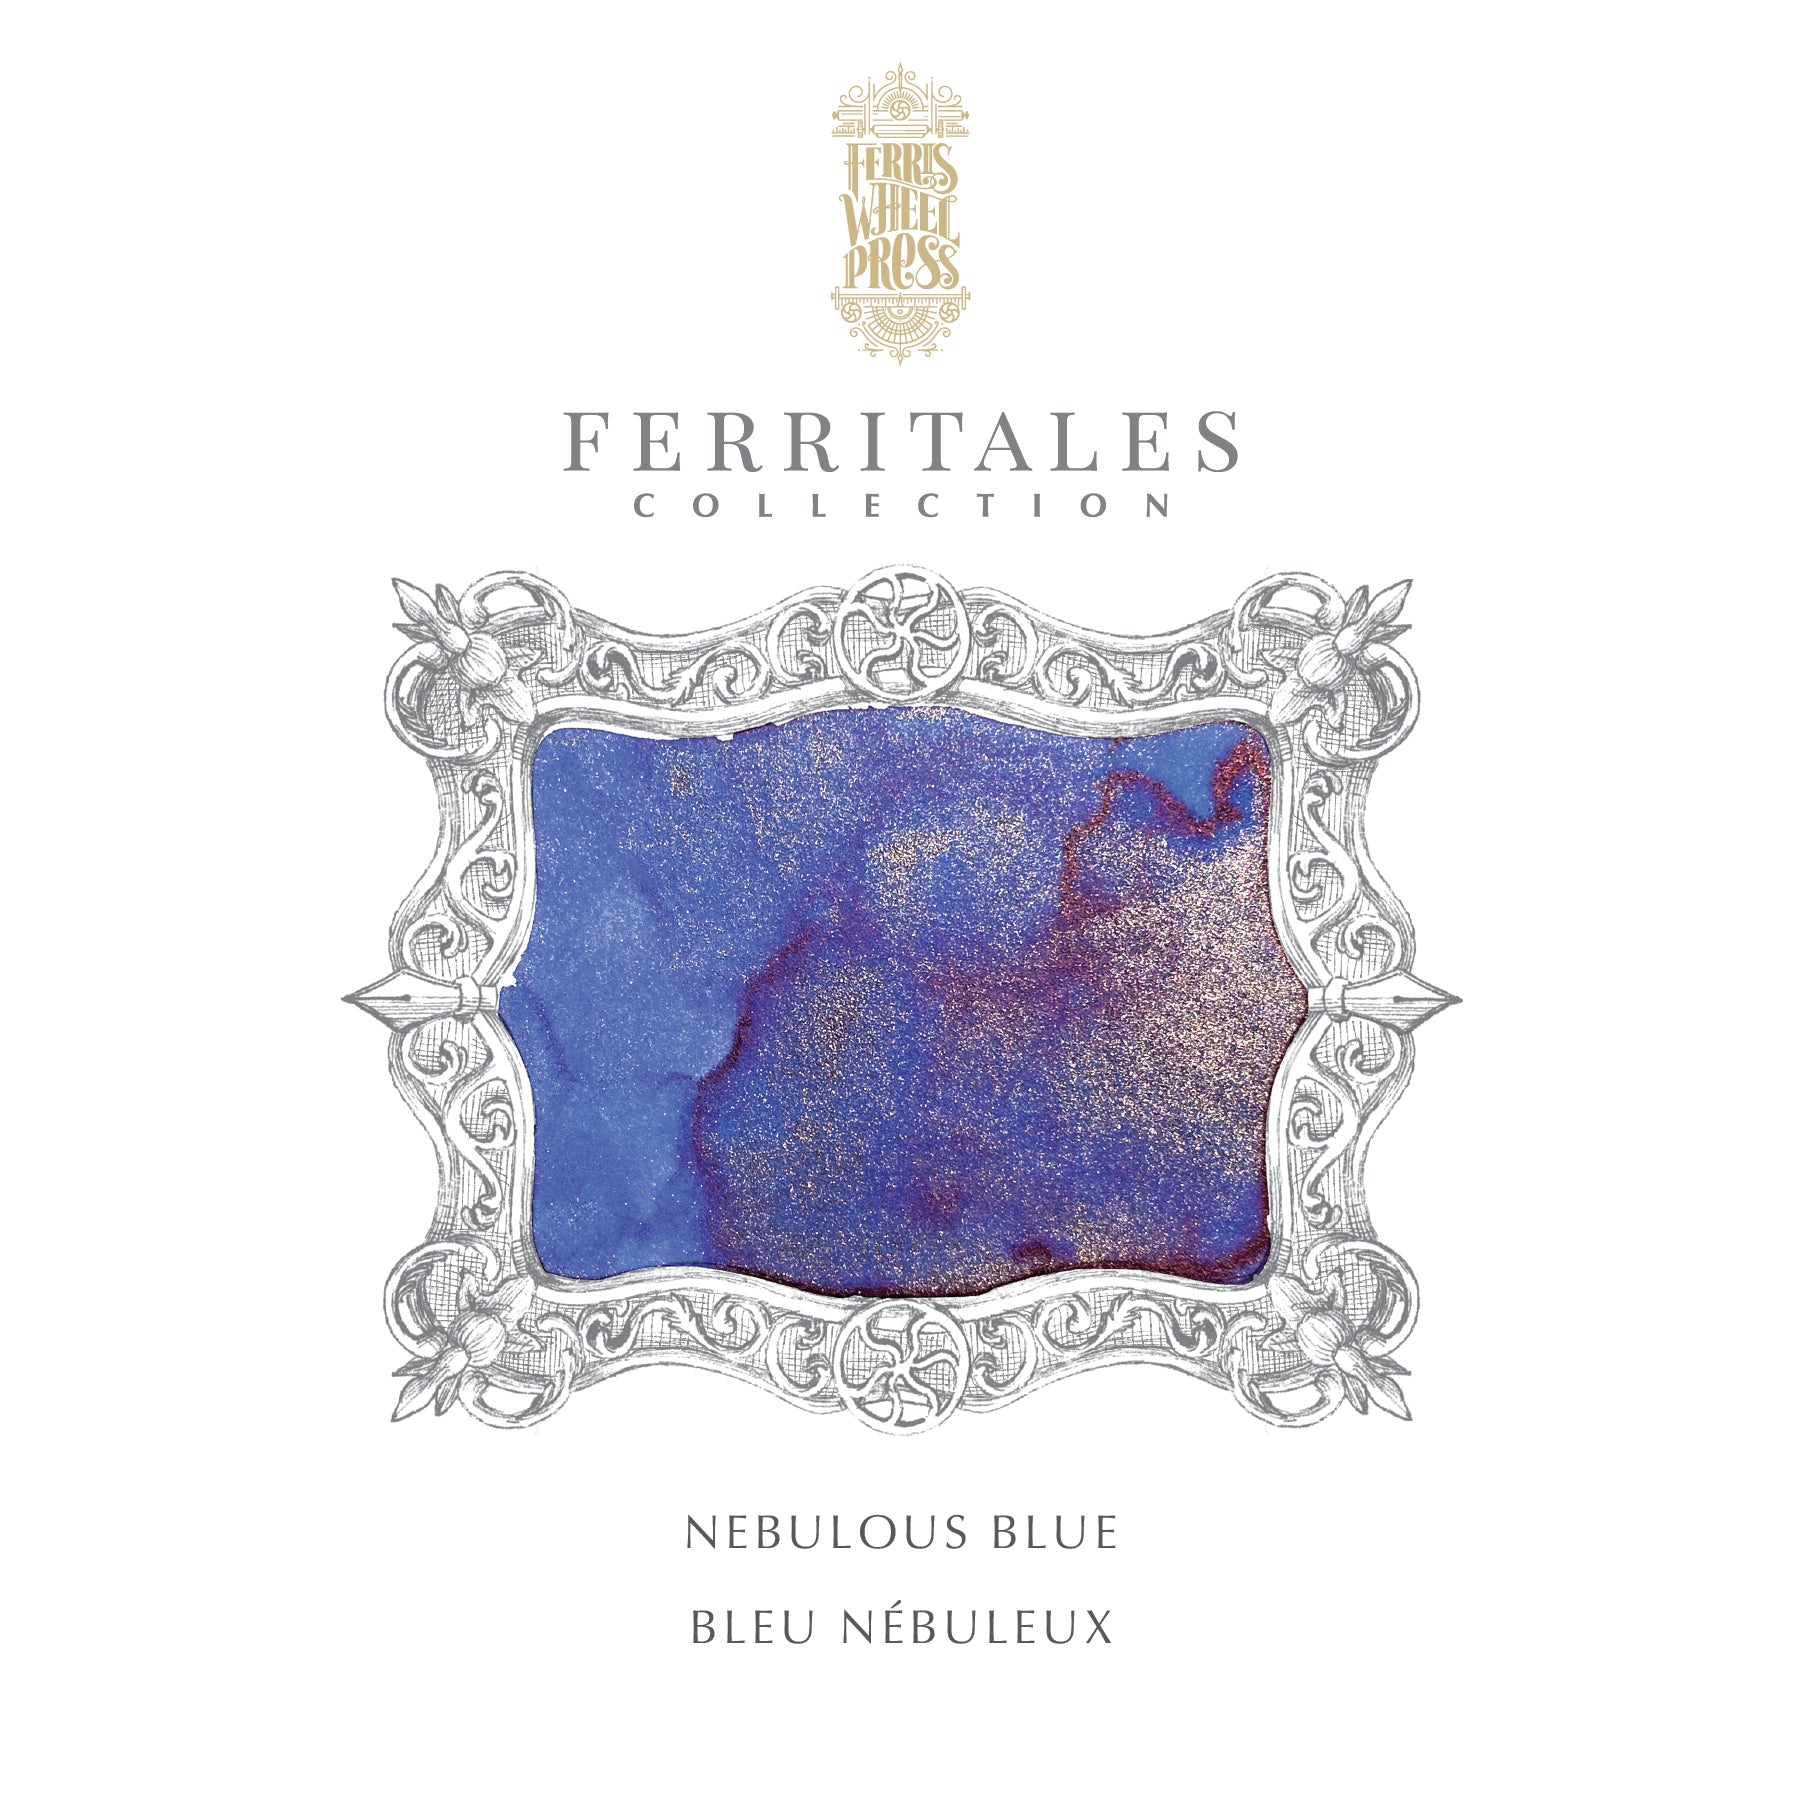 Curious Collaboration FerriTales - Ferris Wheel Press x Esterbrook Collection | Nebulous Blue & Nebulous Plume